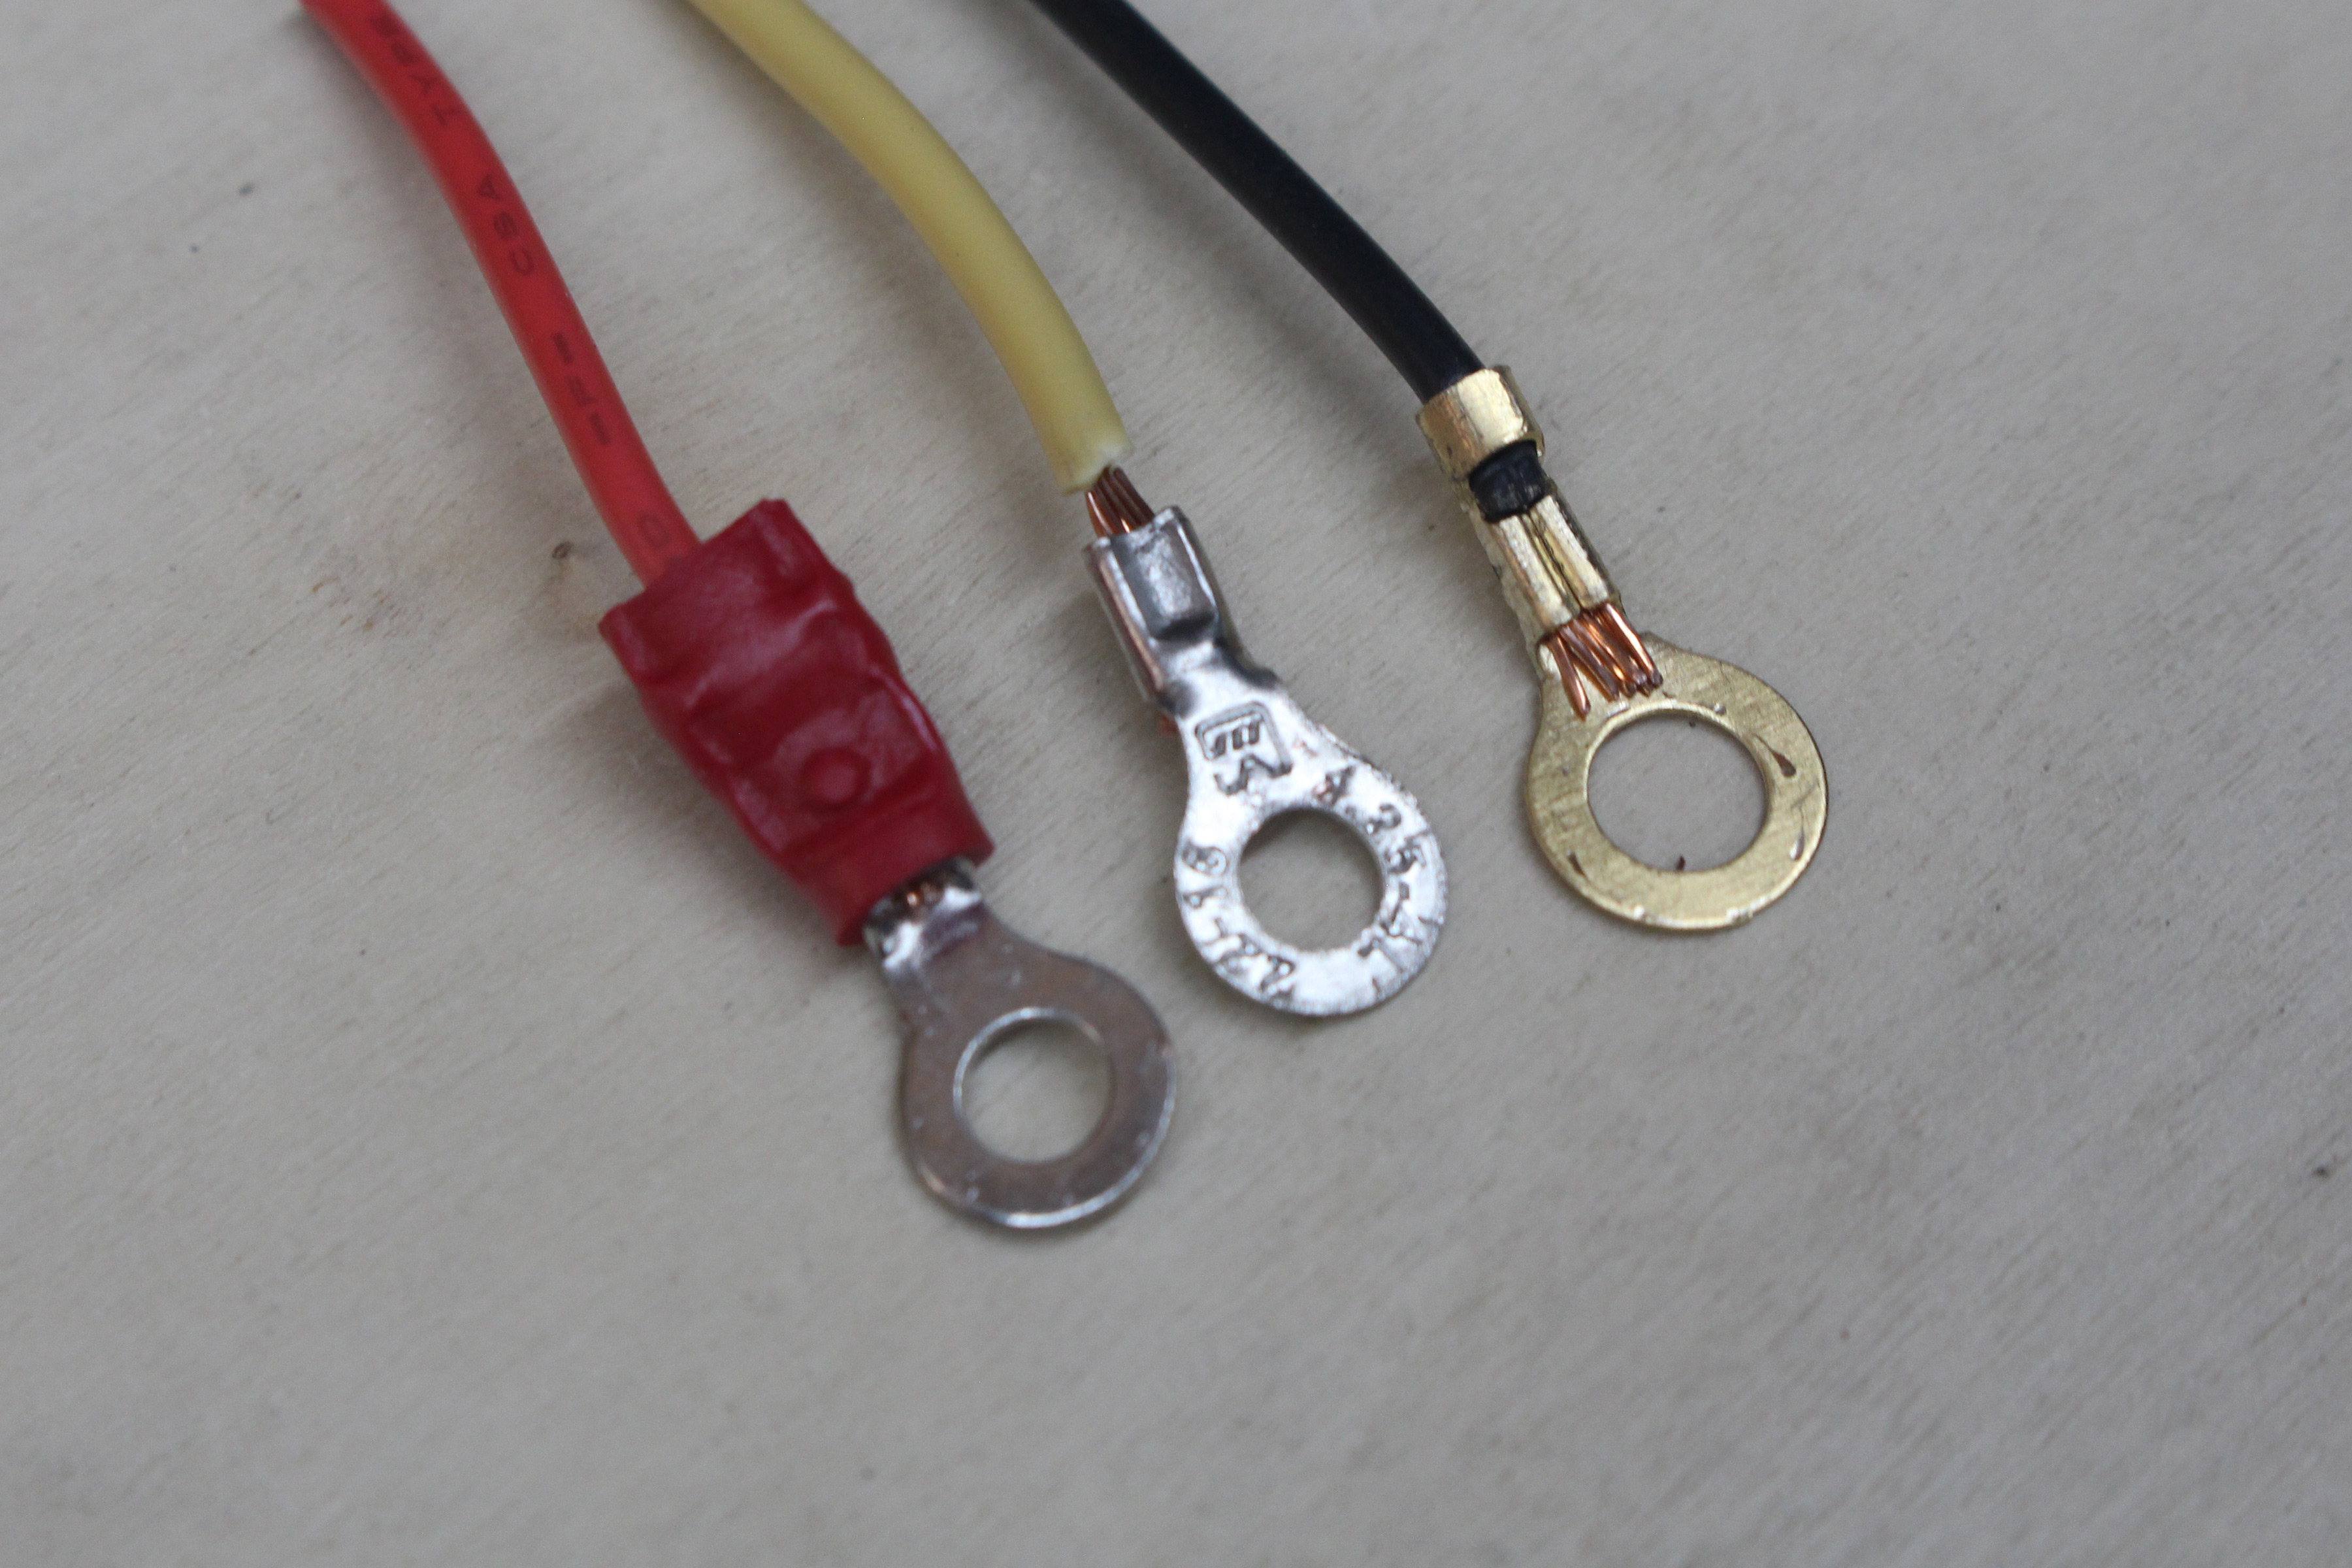 Quick Change Ratchet Crimping Tool Kit For Wire Terminals 7pcs Ergo Design 